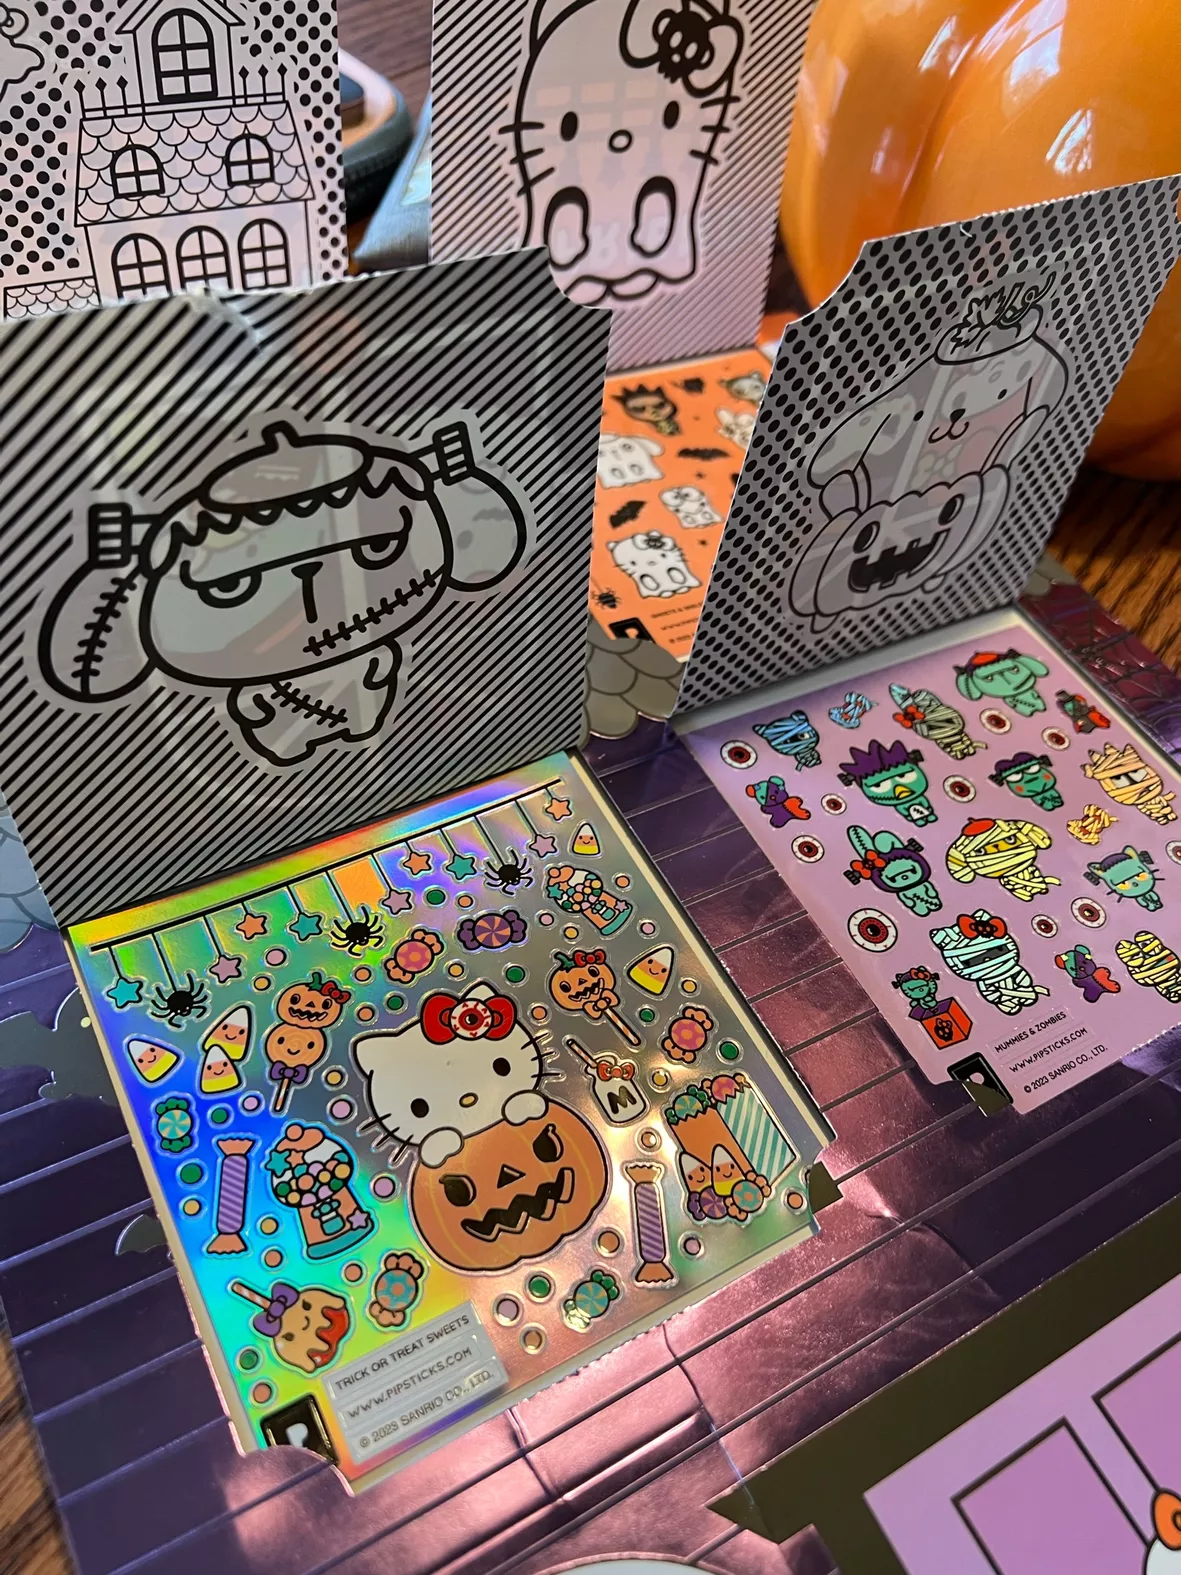 Hello Kitty and Friends Halloween Sticker Countdown